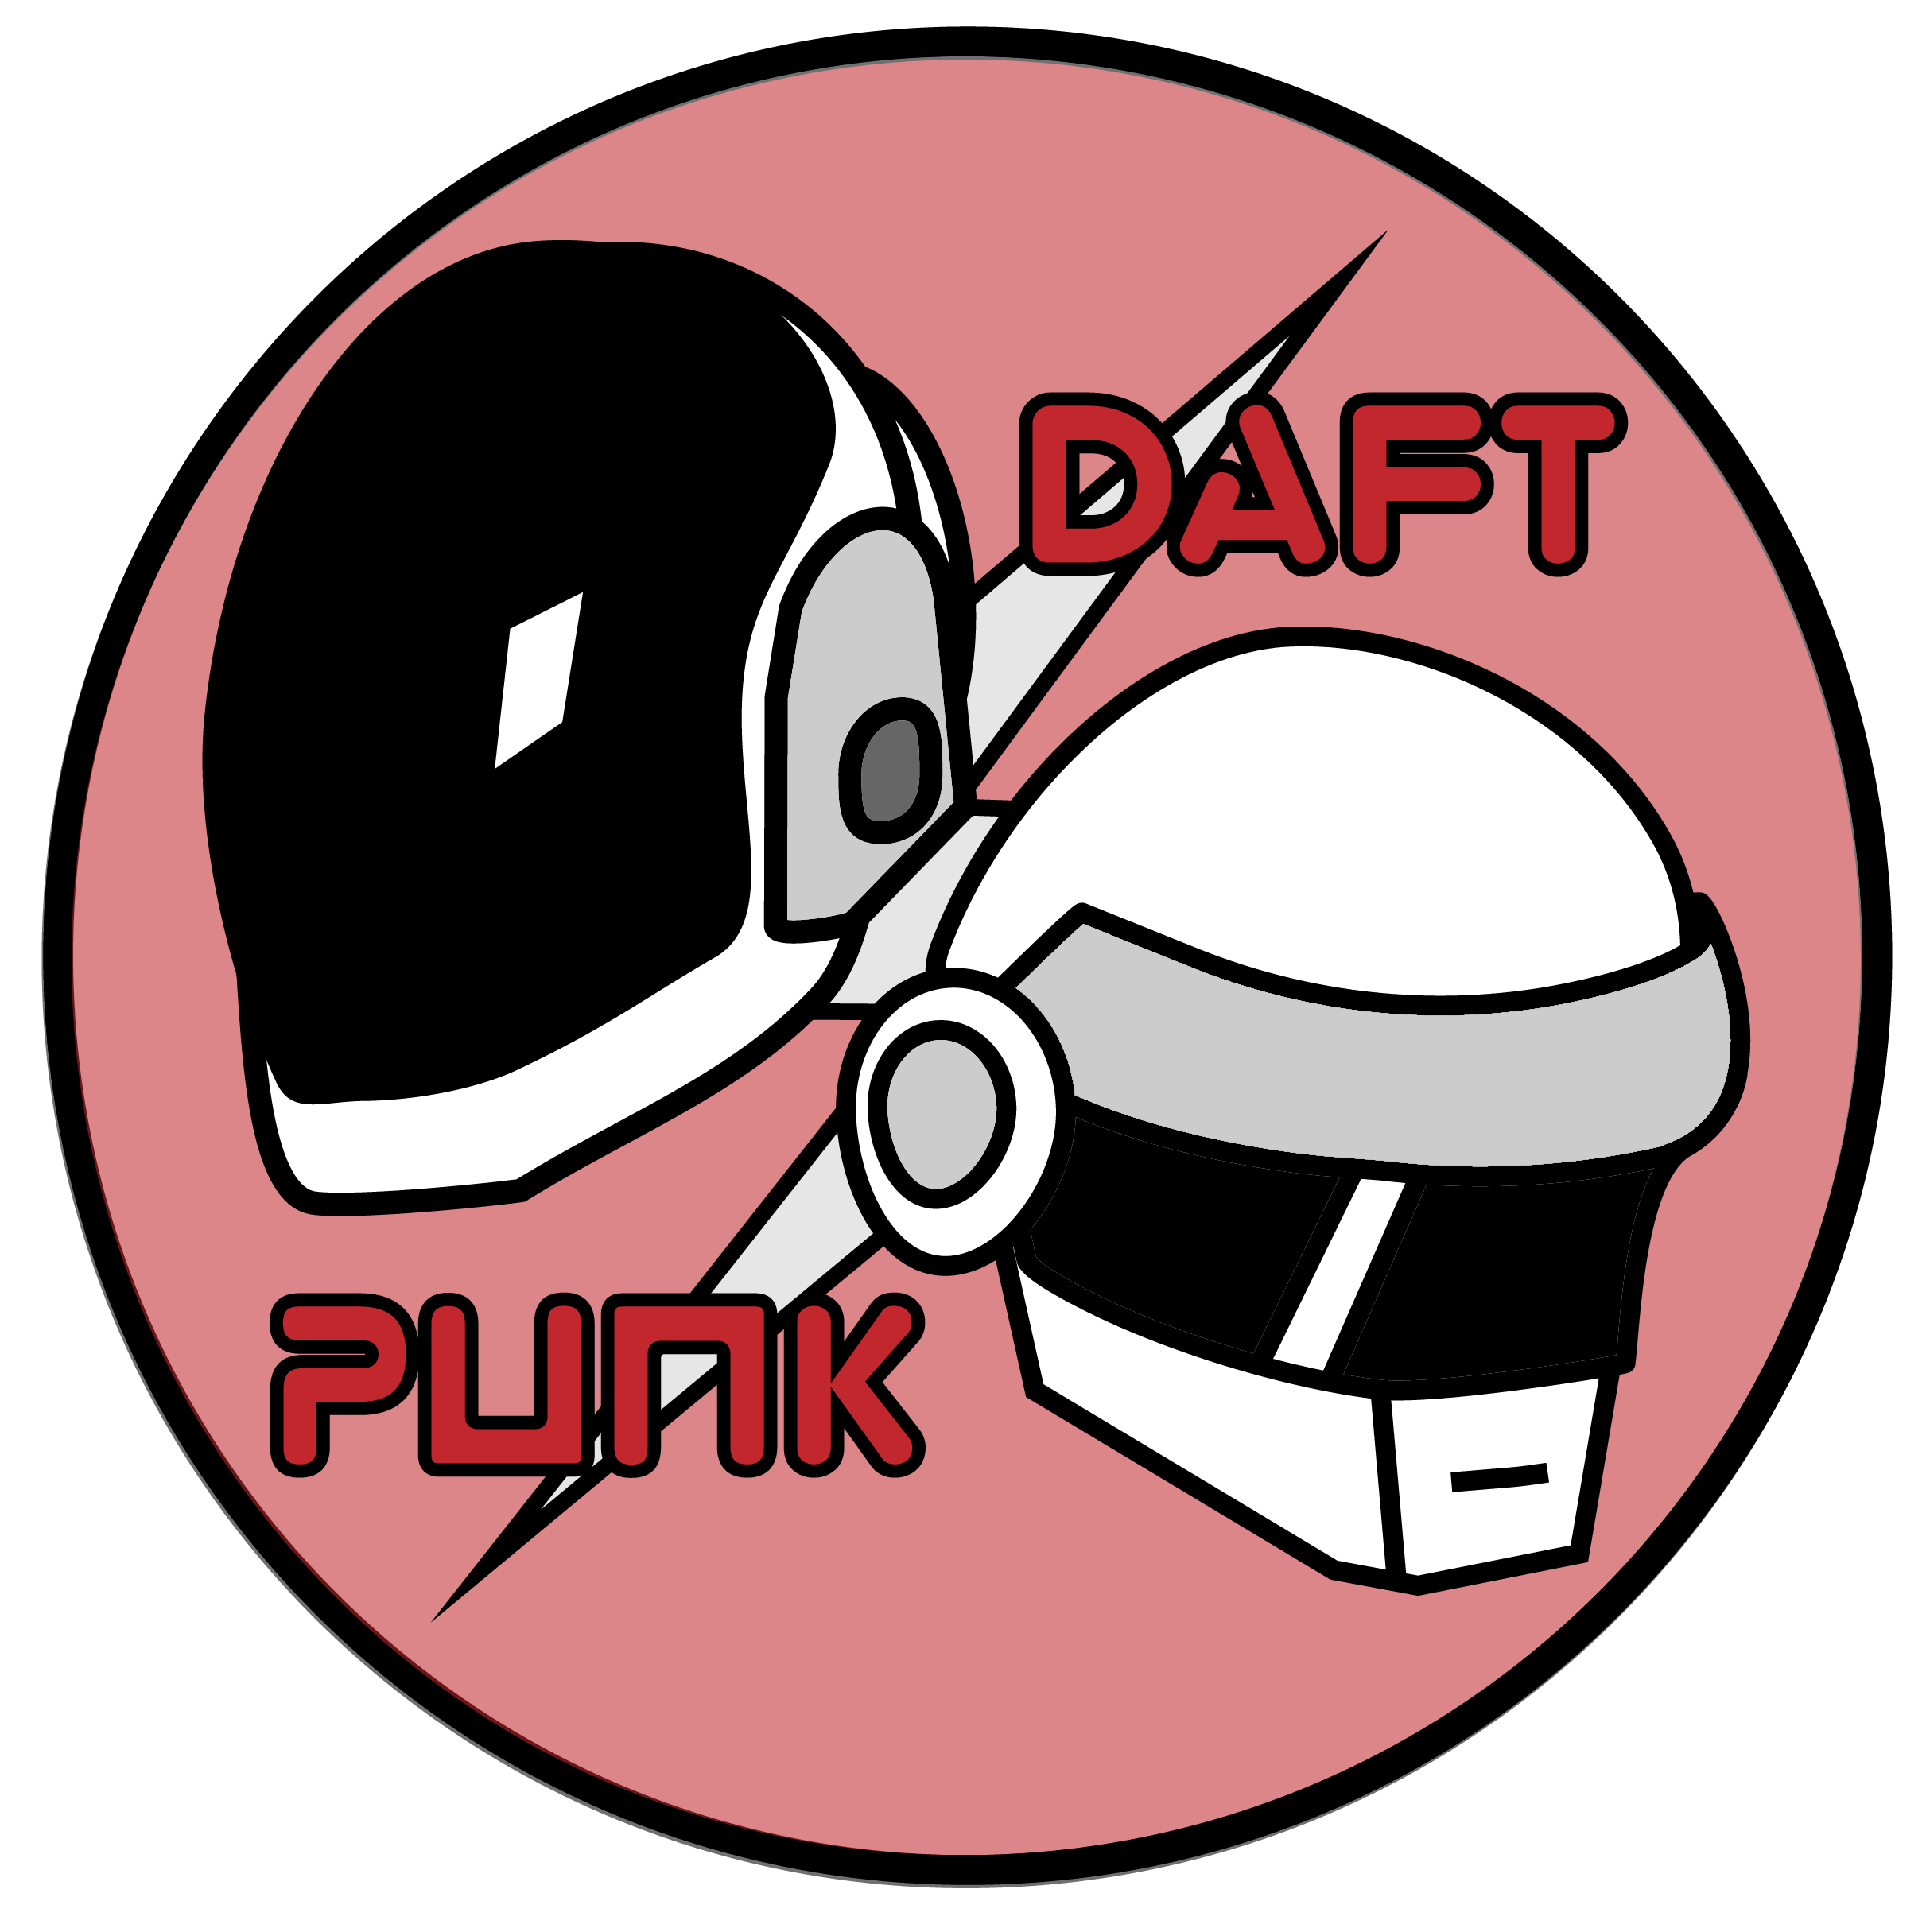 Punk Logo - Daft Punk Logo : DaftPunk